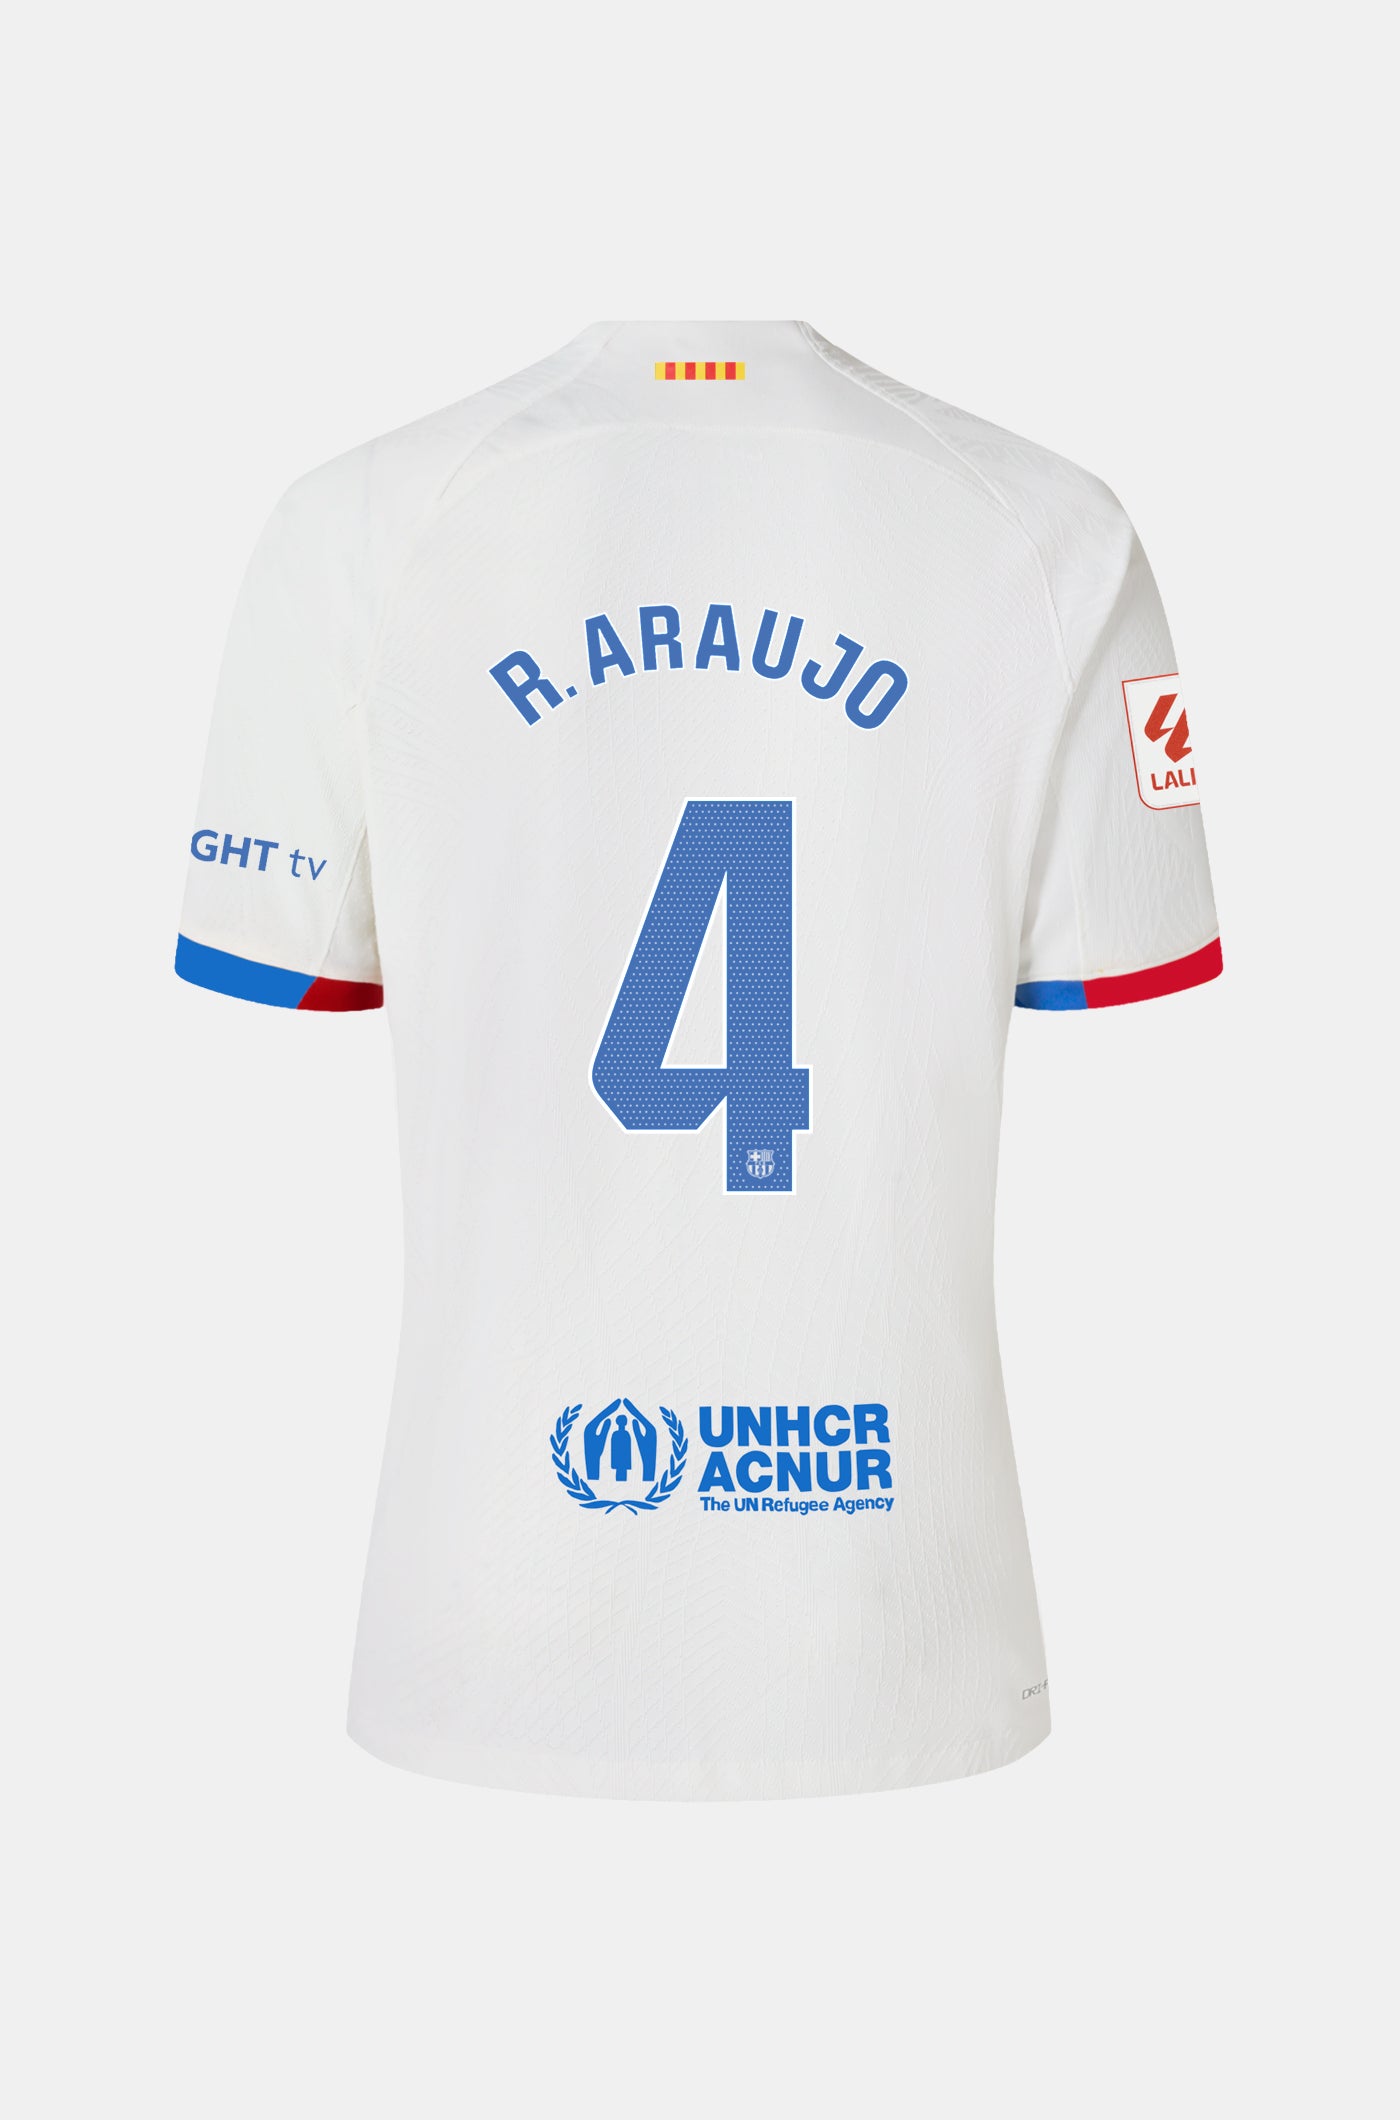 LFP FC Barcelona away shirt 23/24  - R. ARAUJO